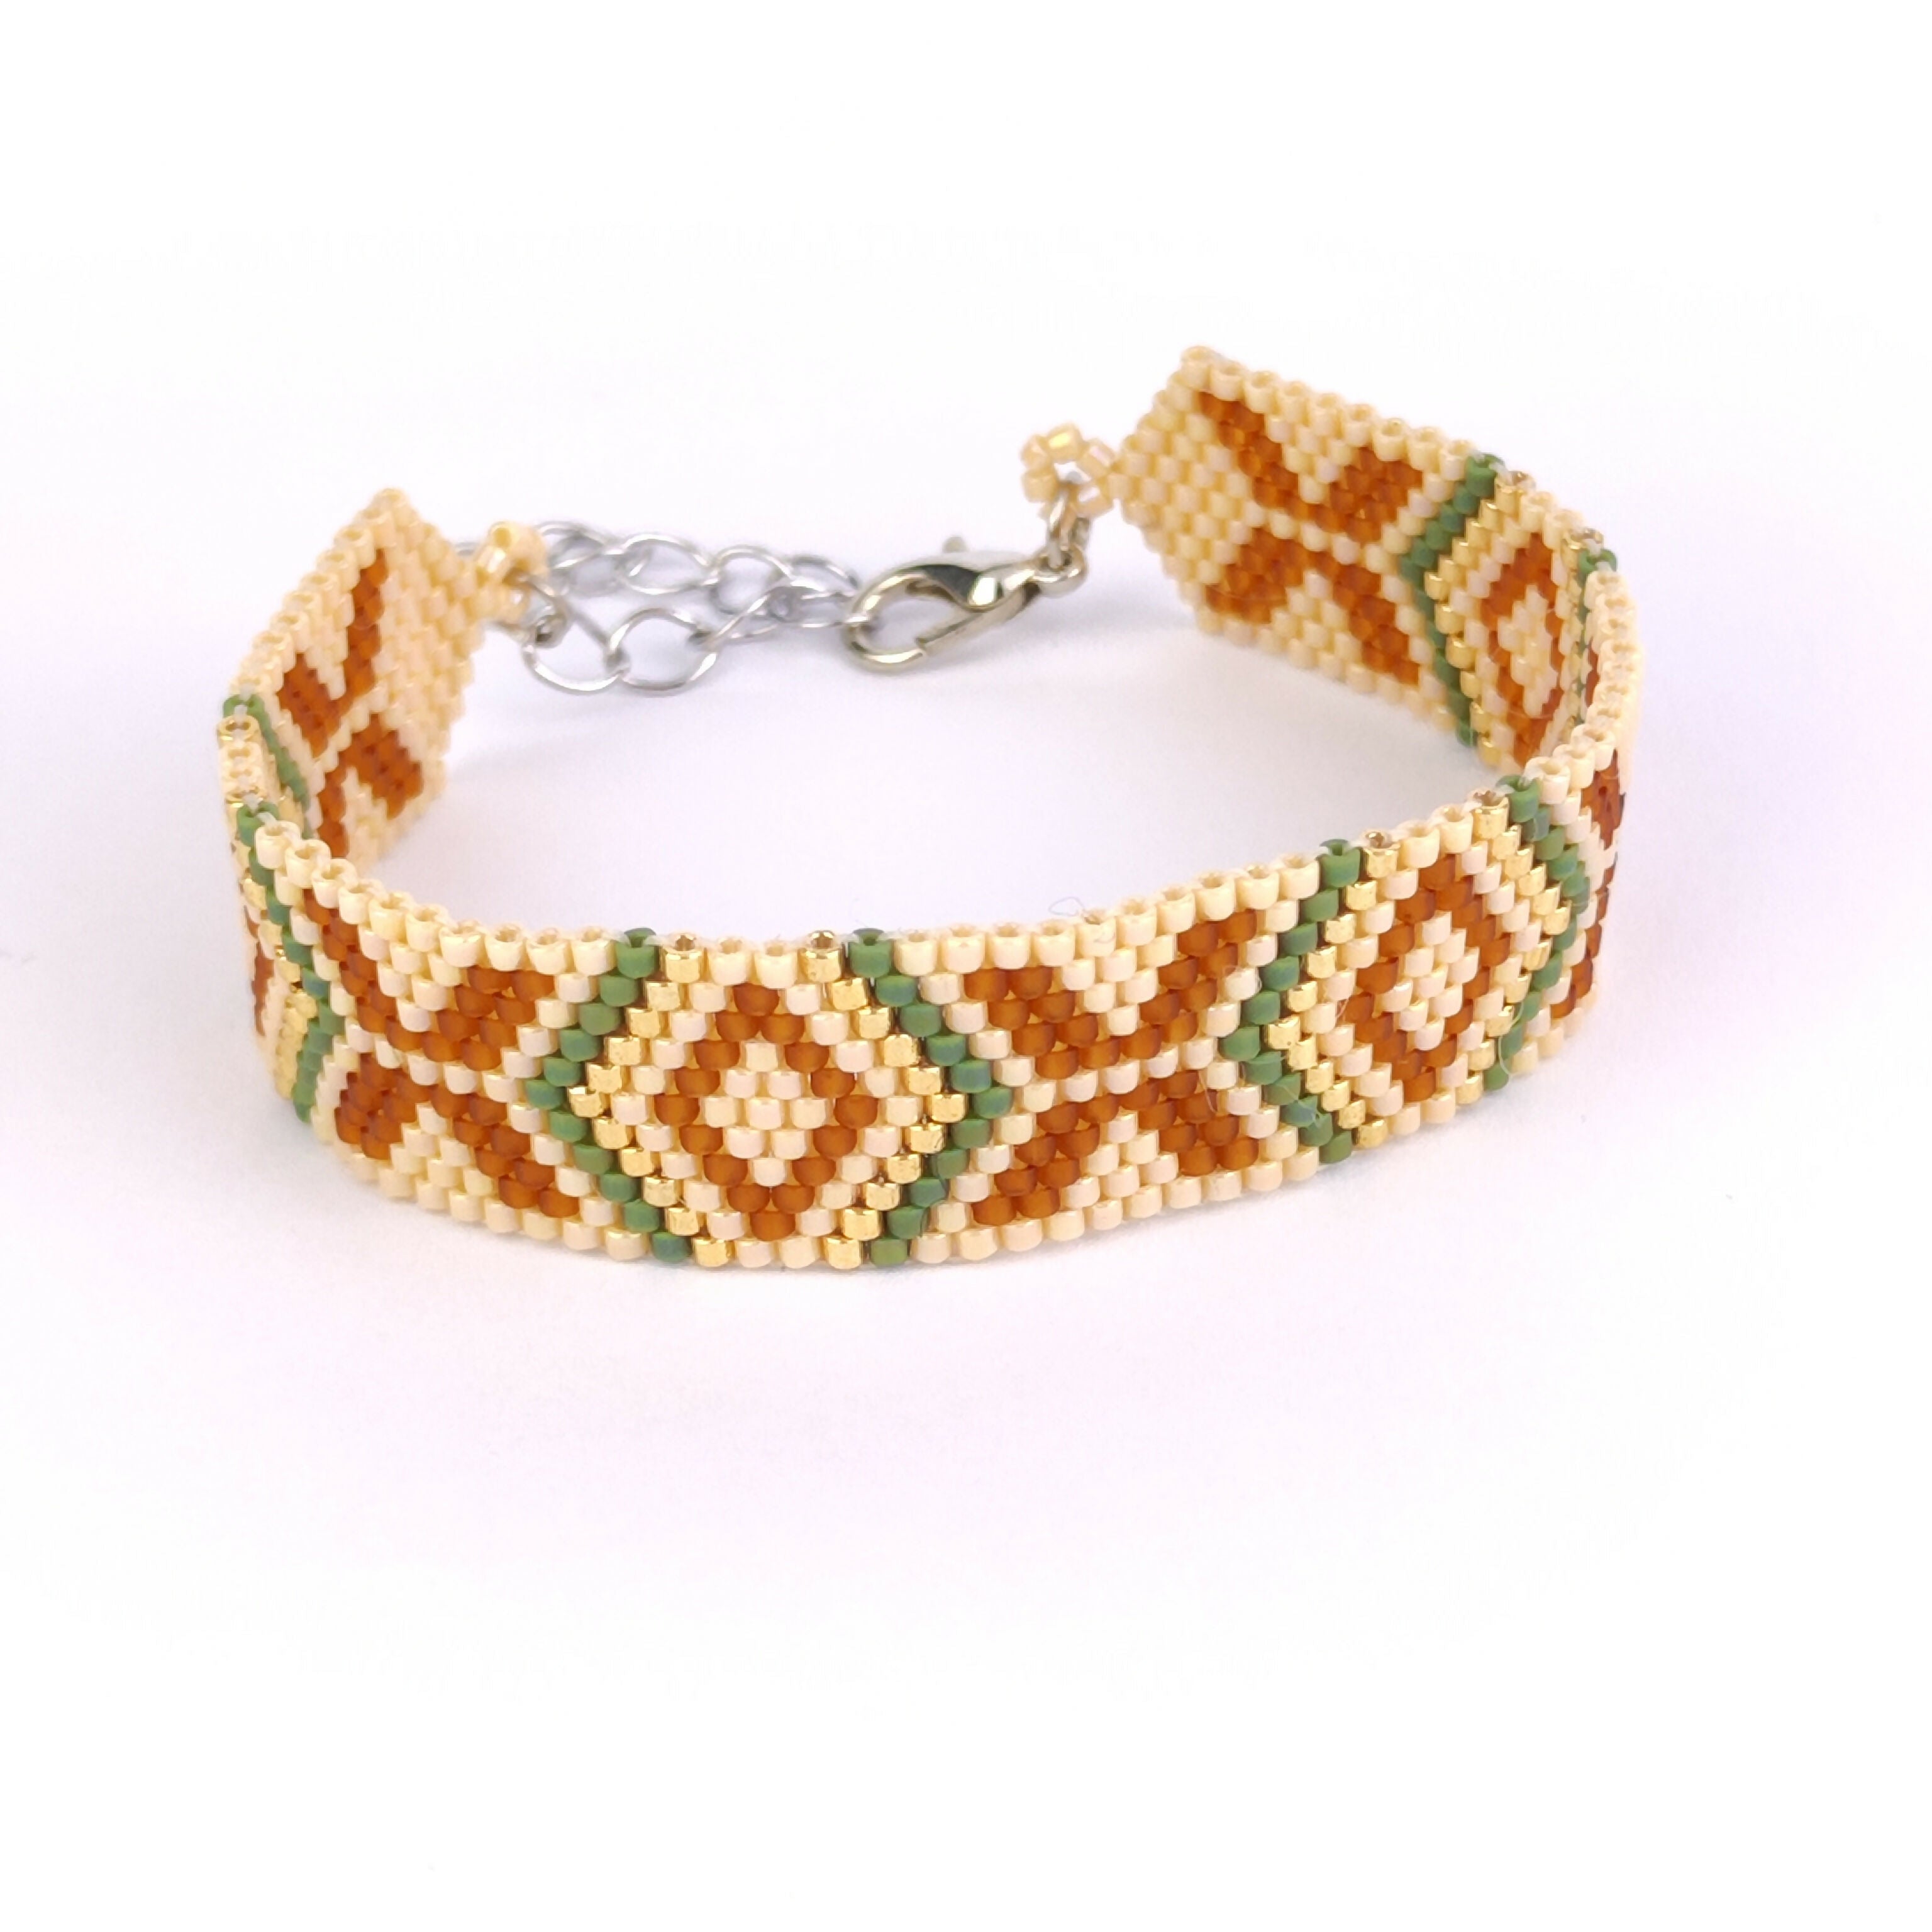 Handwoven Beaded Bracelet - Traditional Kilim Motifs